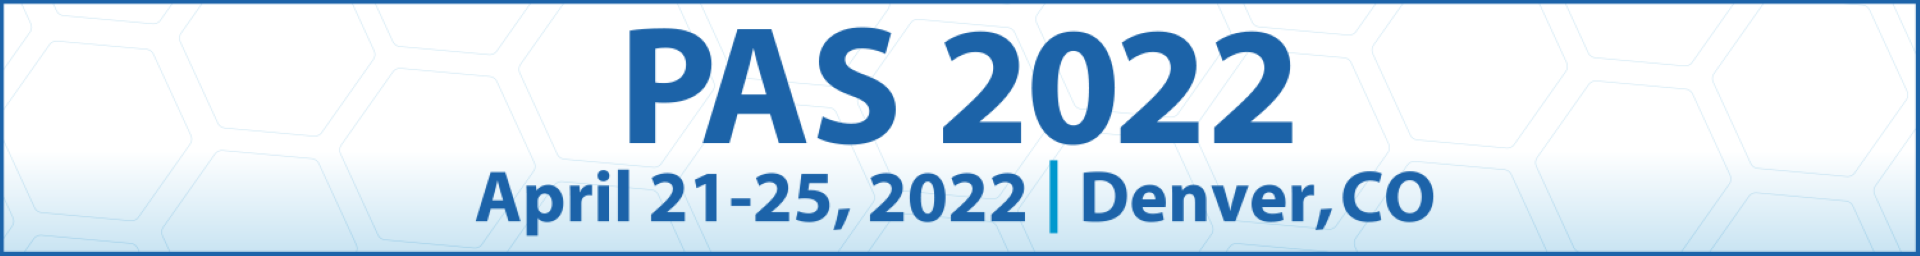 PAS 2022 Event Event Banner